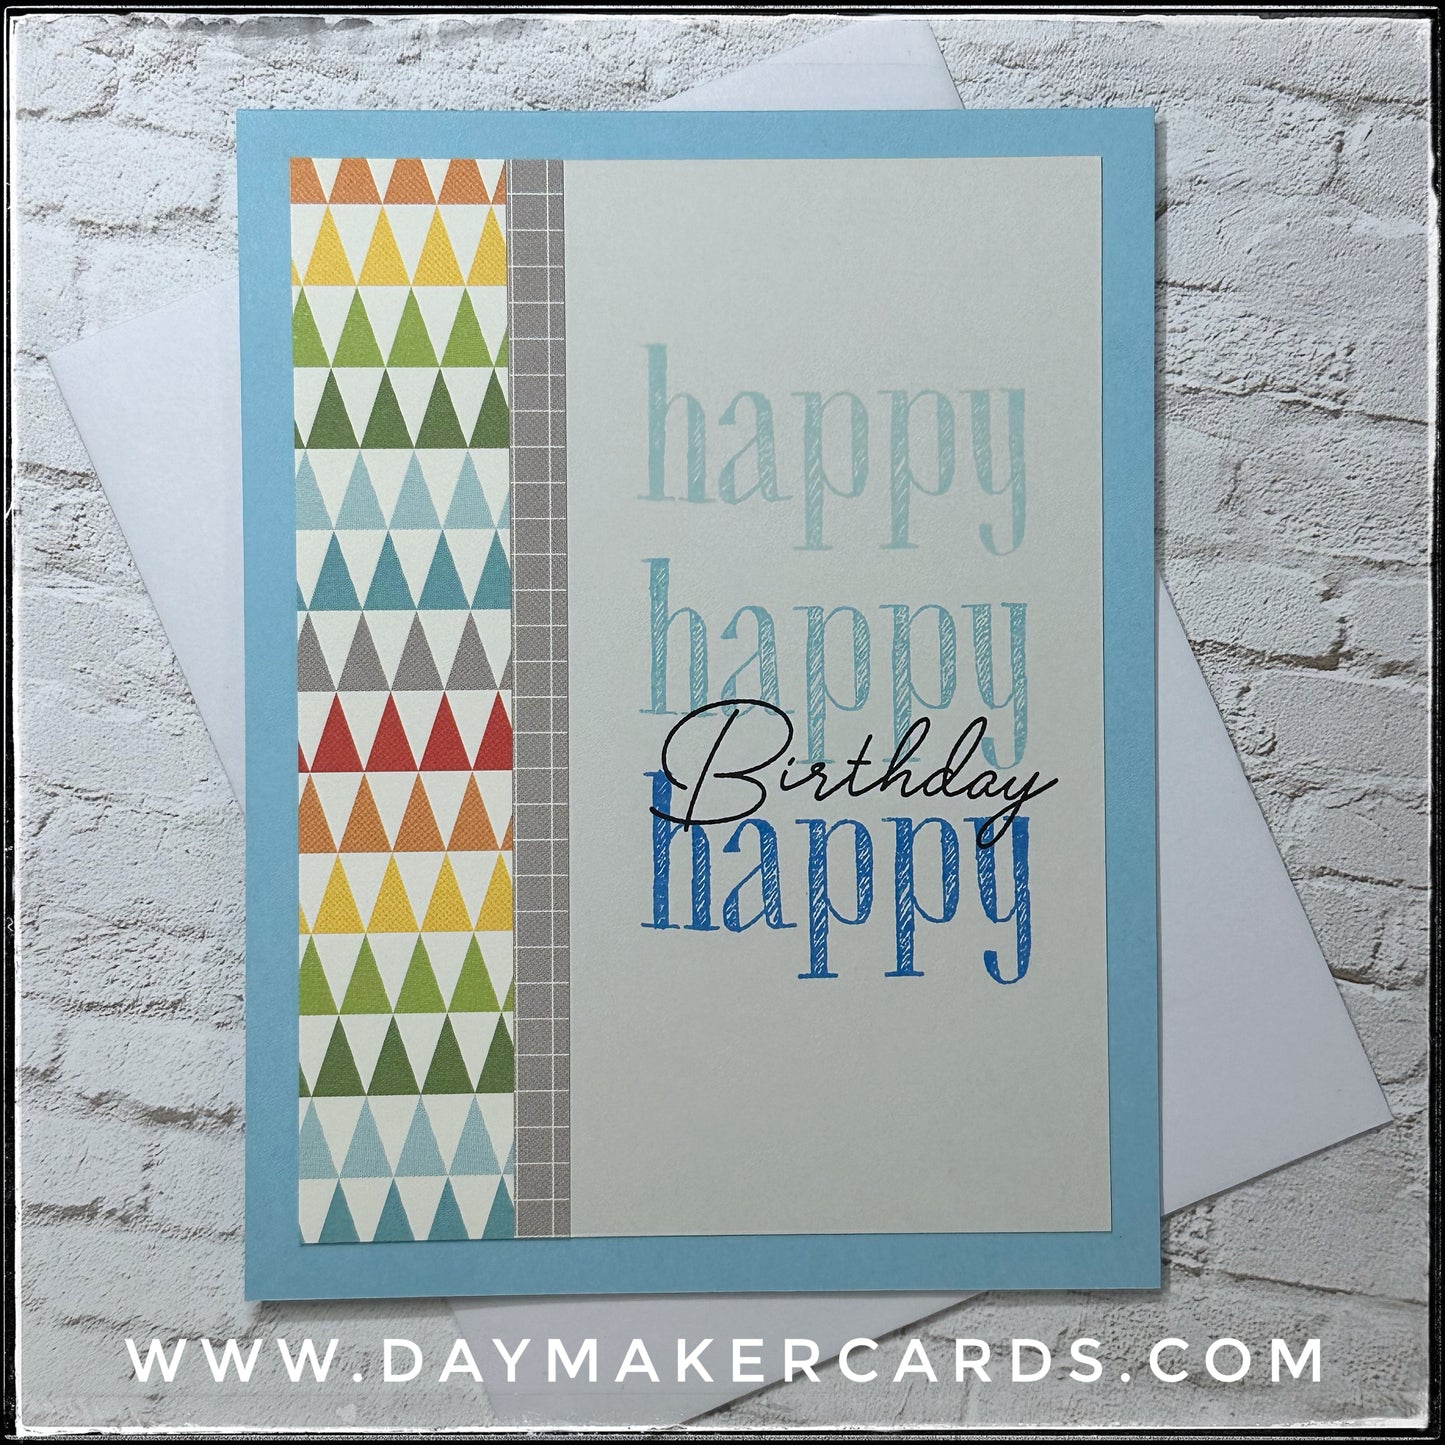 Set - Happy Happy Happy Birthday Handmade Cards